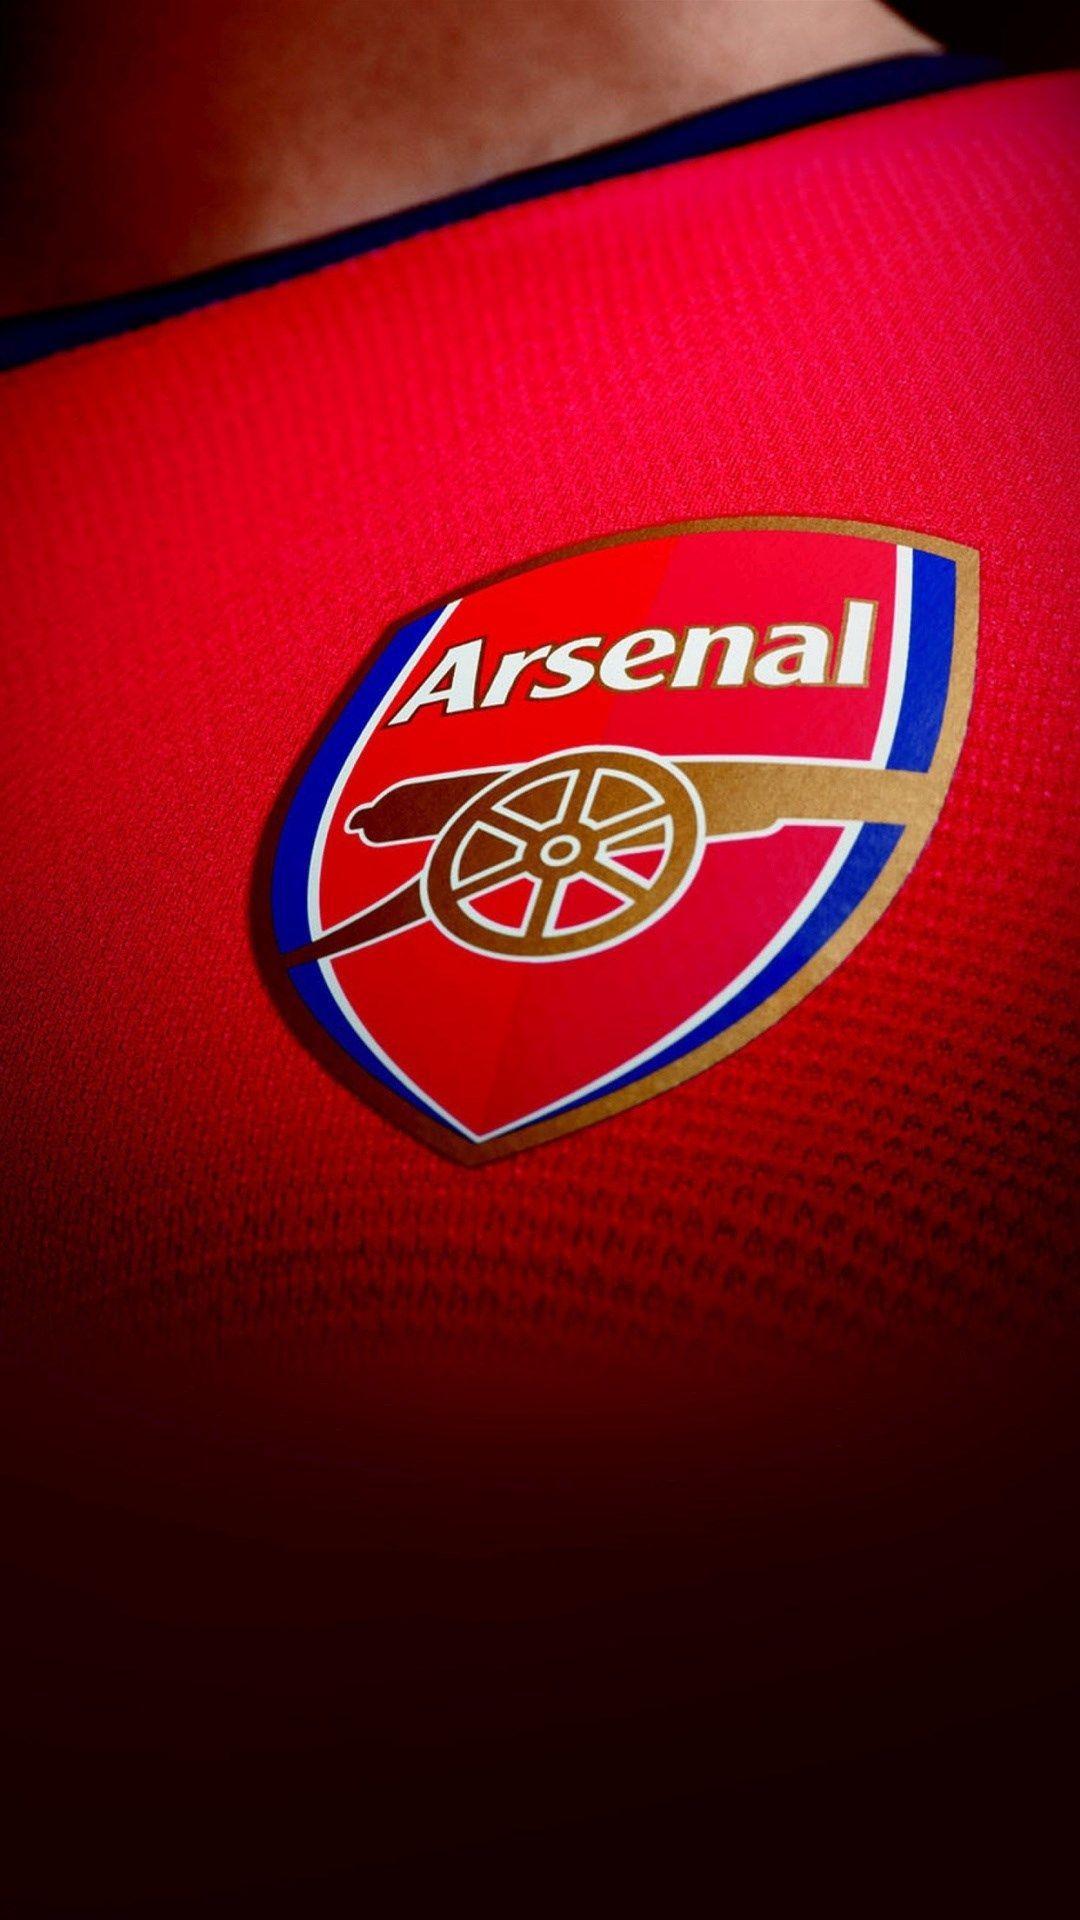 arsenal football team logo england soccer iphone wallpaper